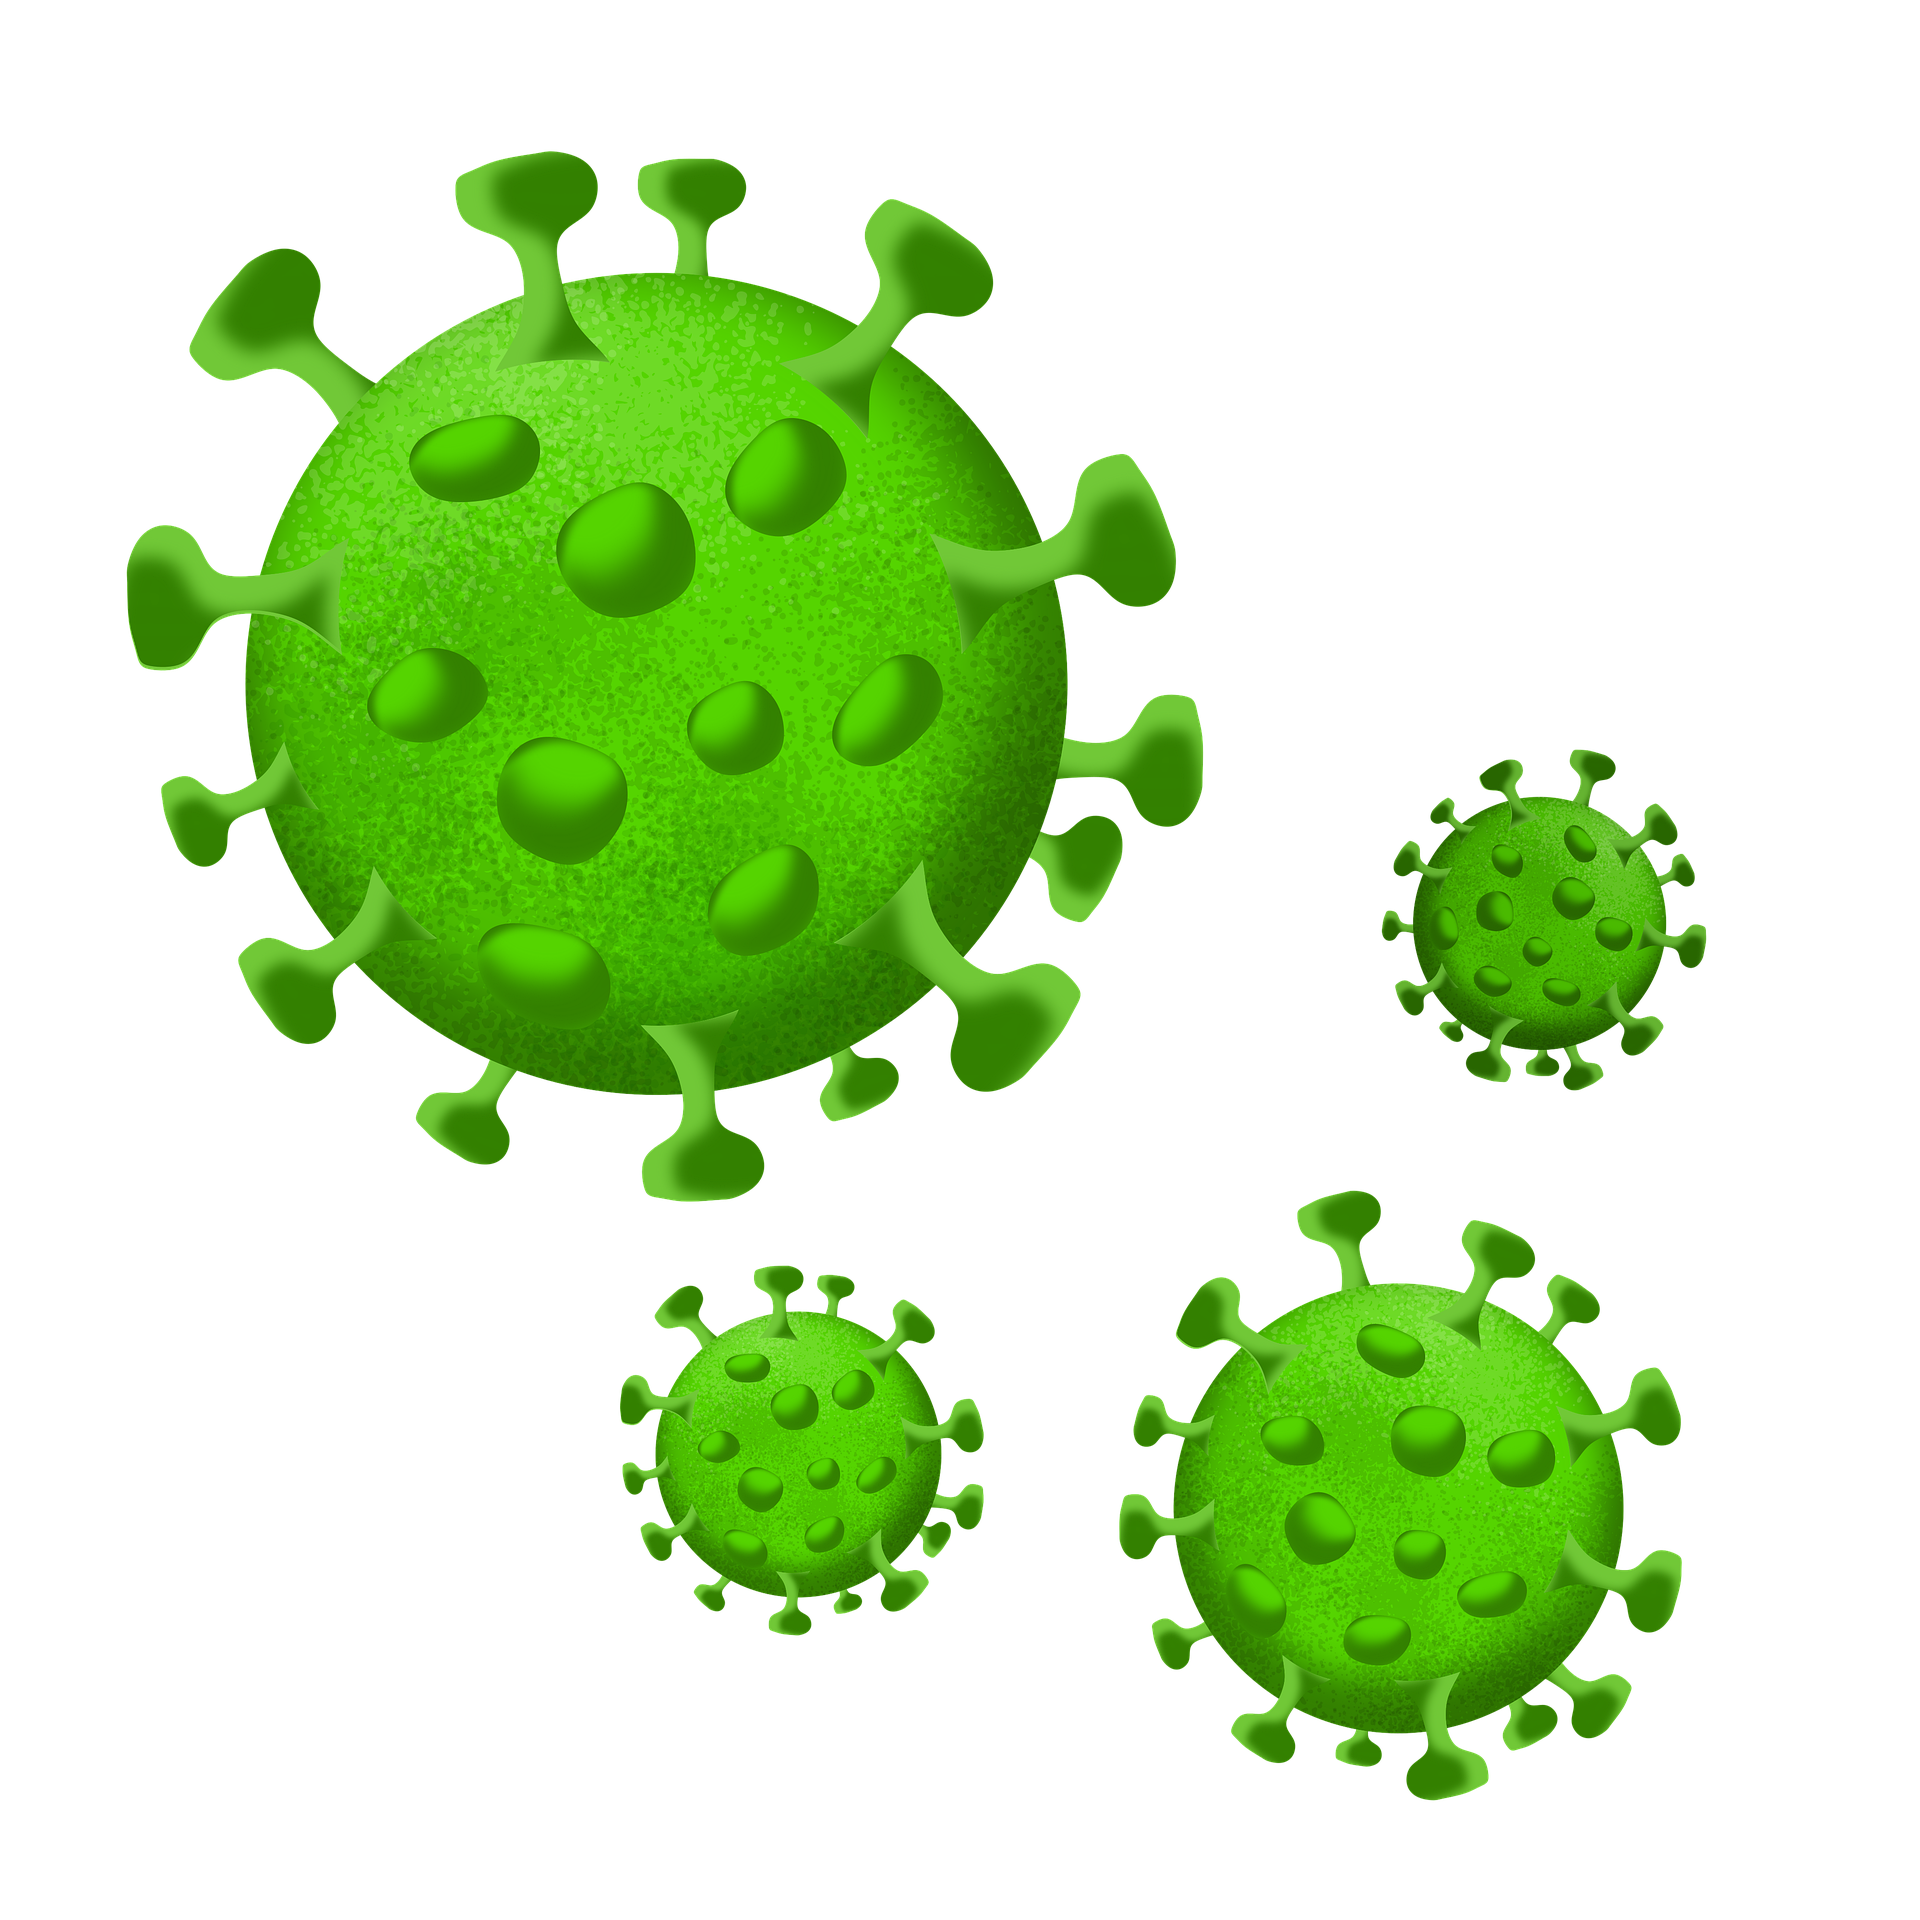 Вирус Covid-19. Вирус ковид стикер. Коронавирус рисунок вируса. Вирус на прозрачном фоне. Векторный коронавирус